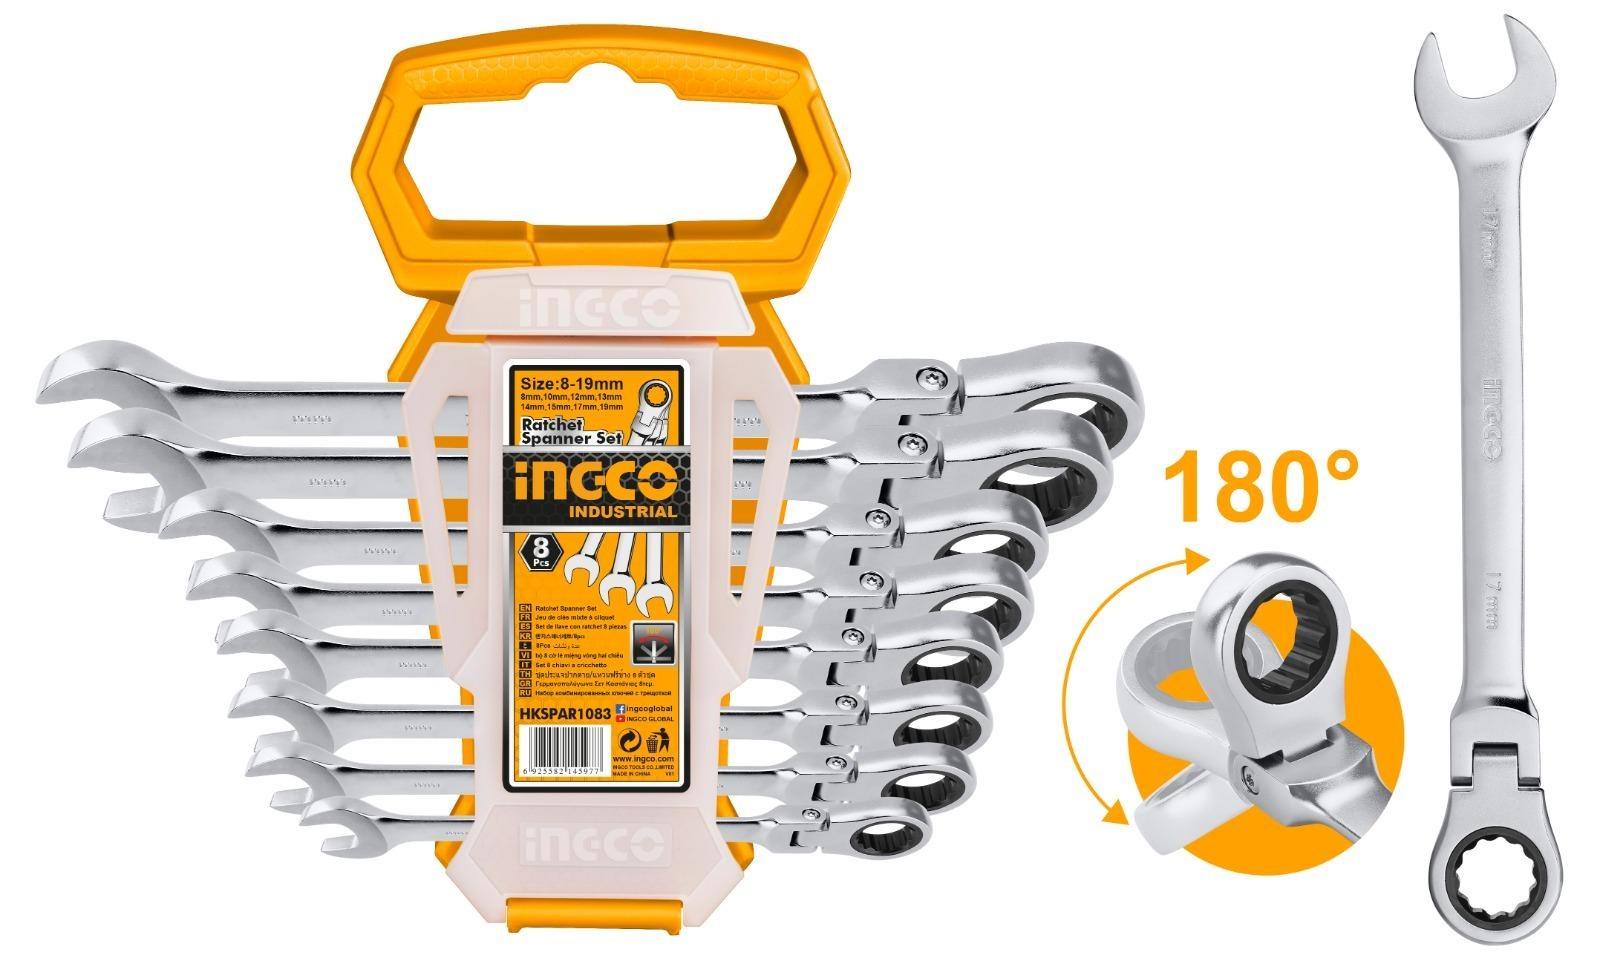 Ingco Endüstriyel 8'li Kombine Cırcır Döner Kafalı Anahtar Seti 8-19mm Ing-hkspar1083 Balsüzen Makina